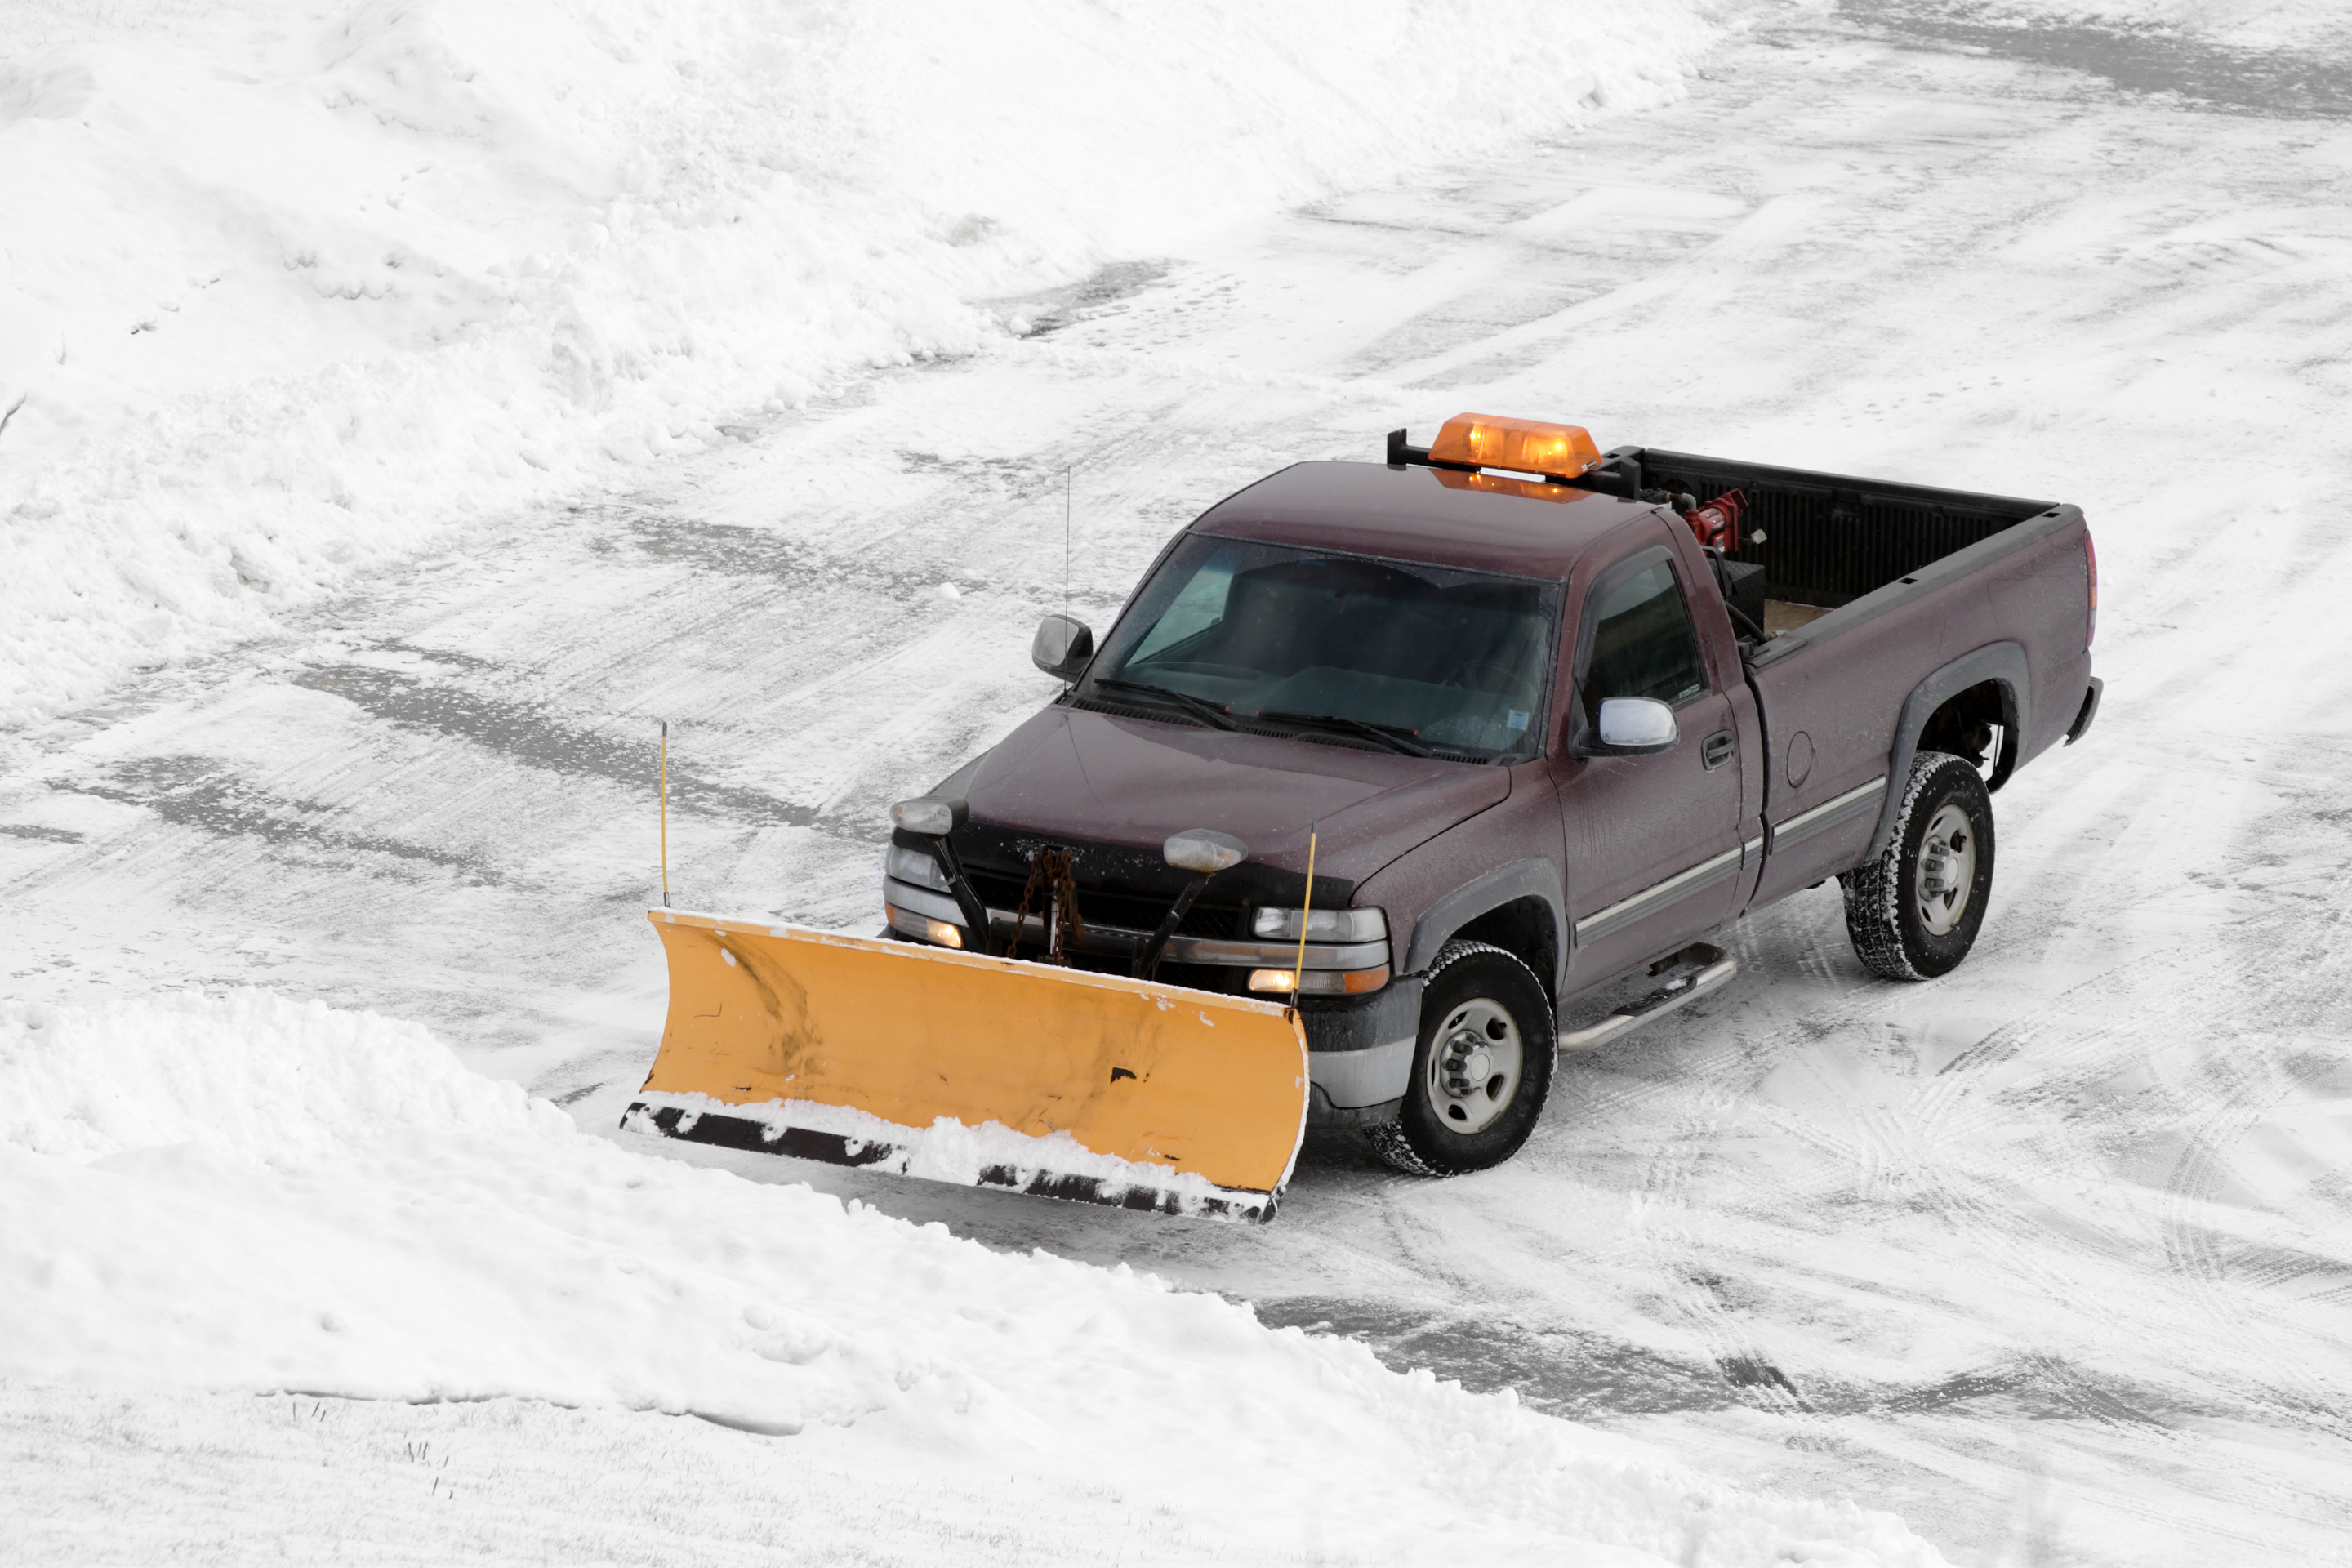 Chcicago's best snow plowing equipment